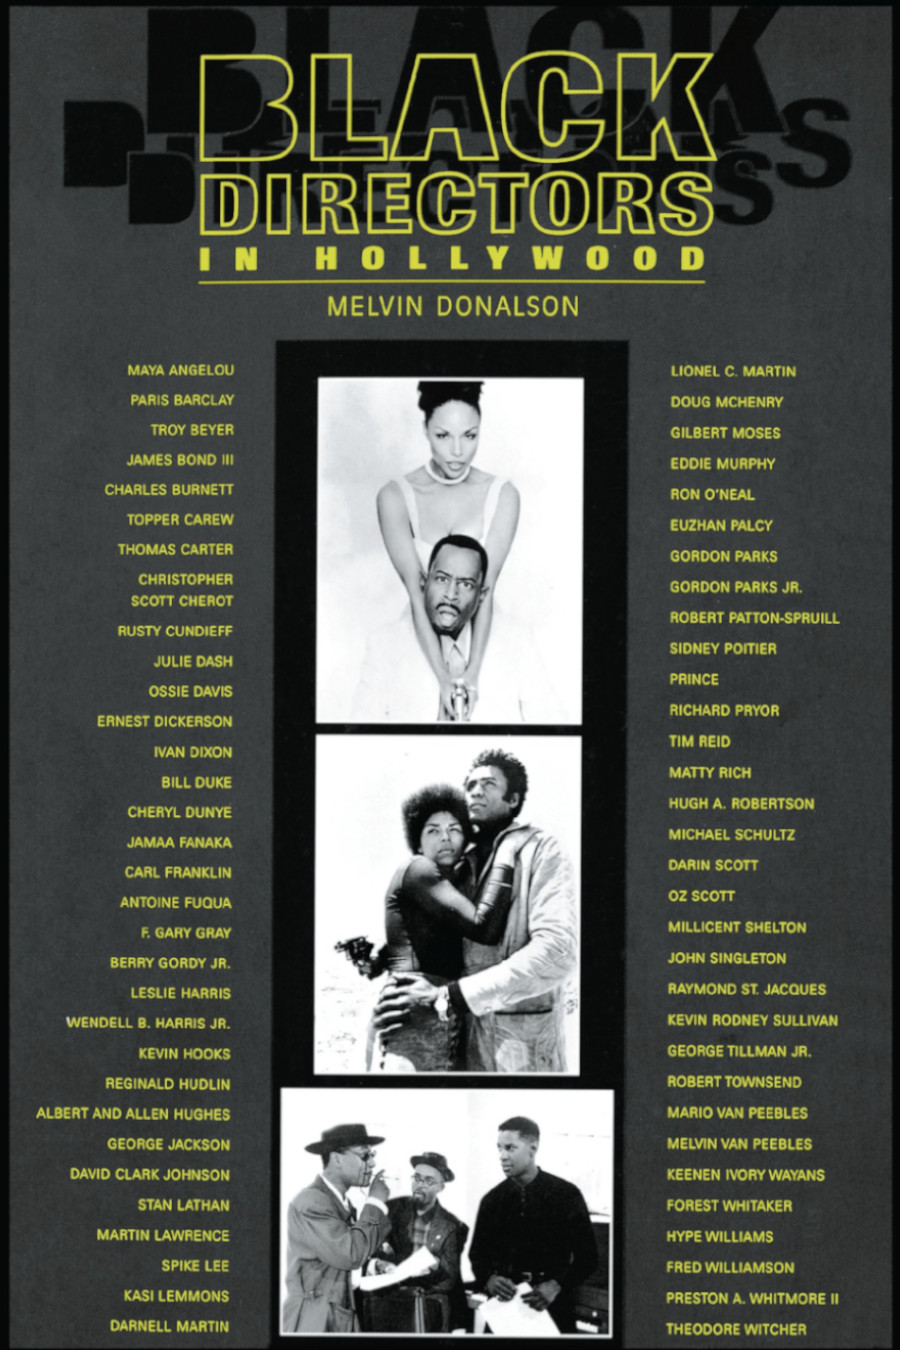 Black Directors in Hollywood